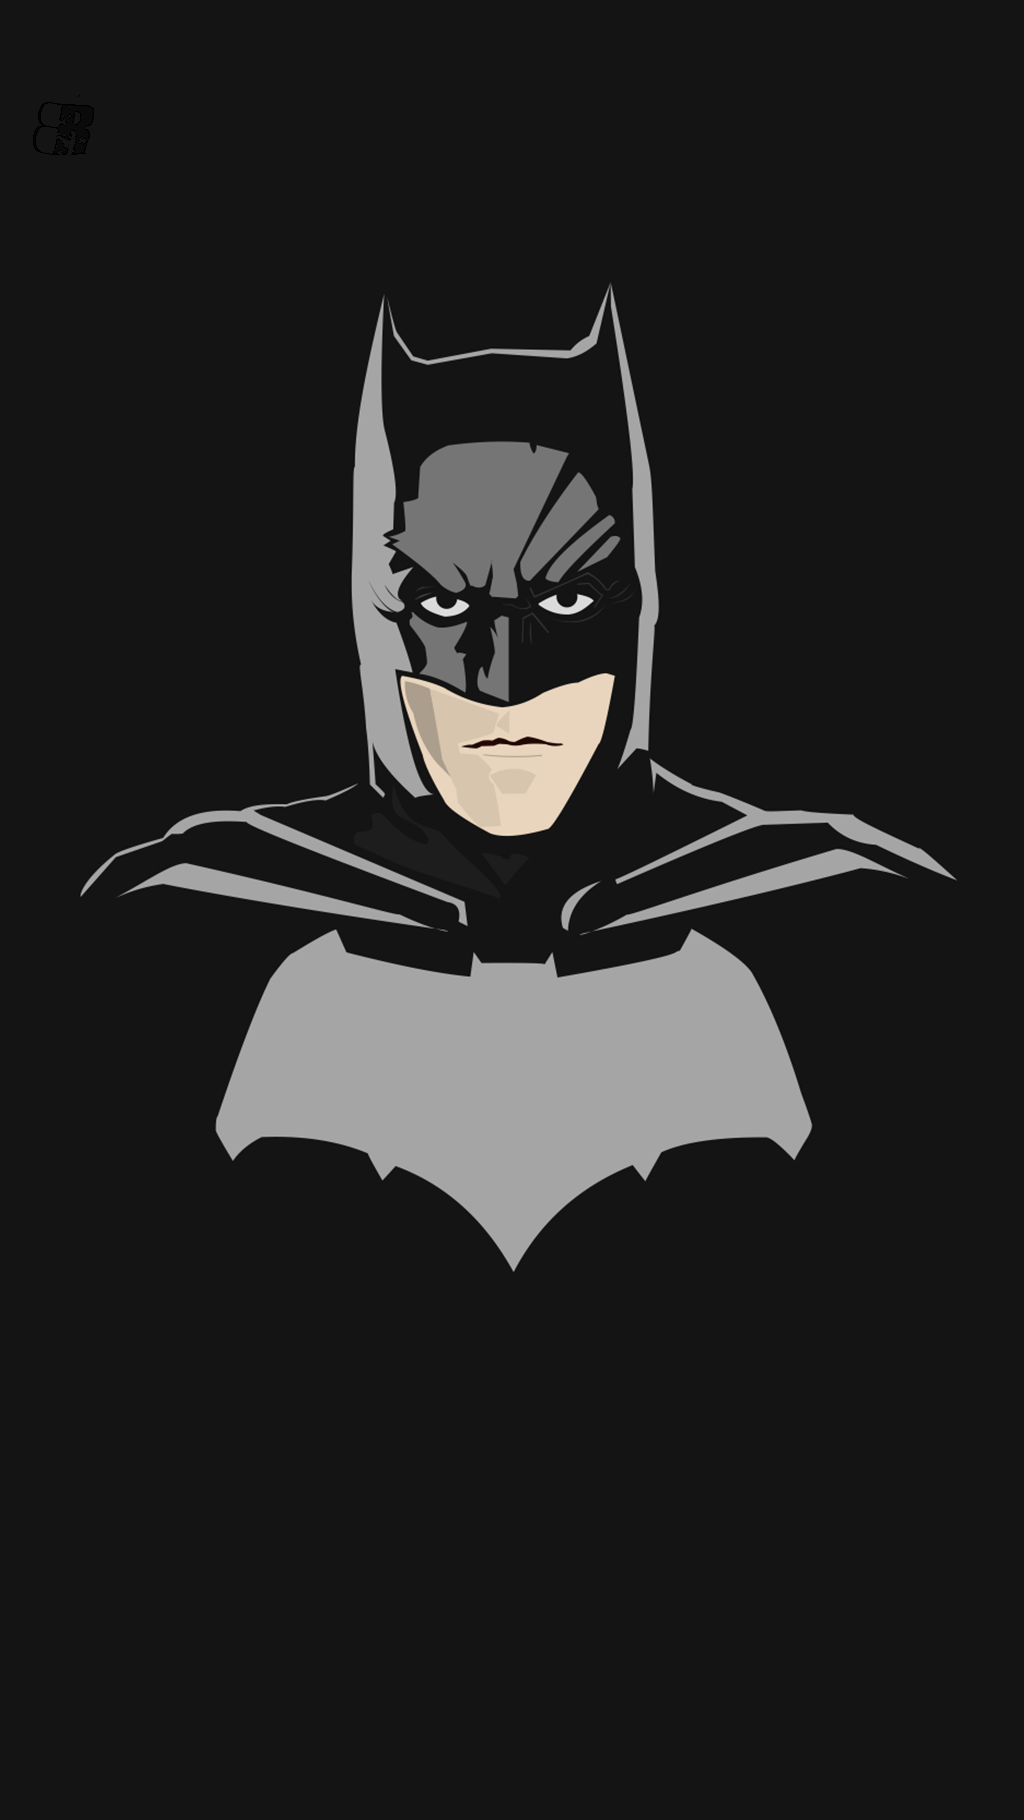 Batman Mobile Wallpaper - vector style by RohitBasu on DeviantArt